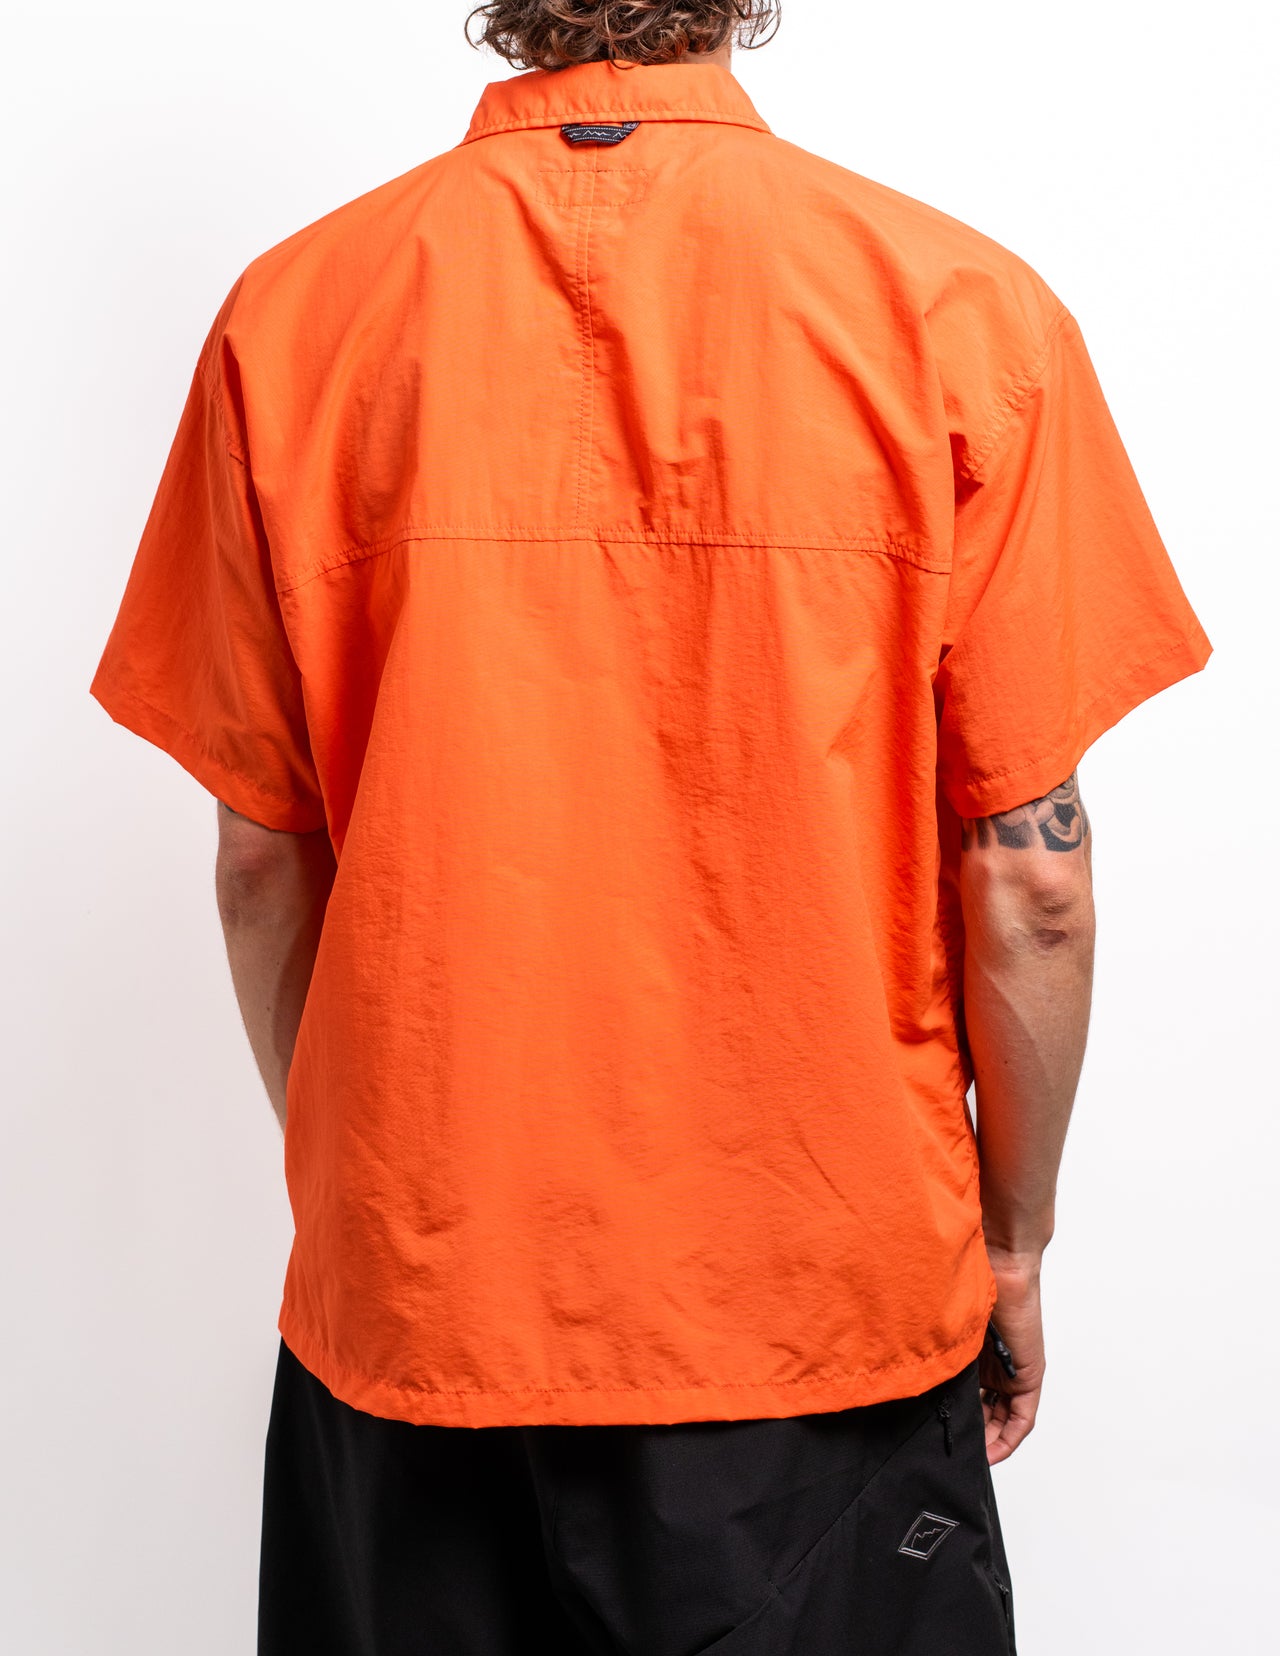 River Shirt in Orange